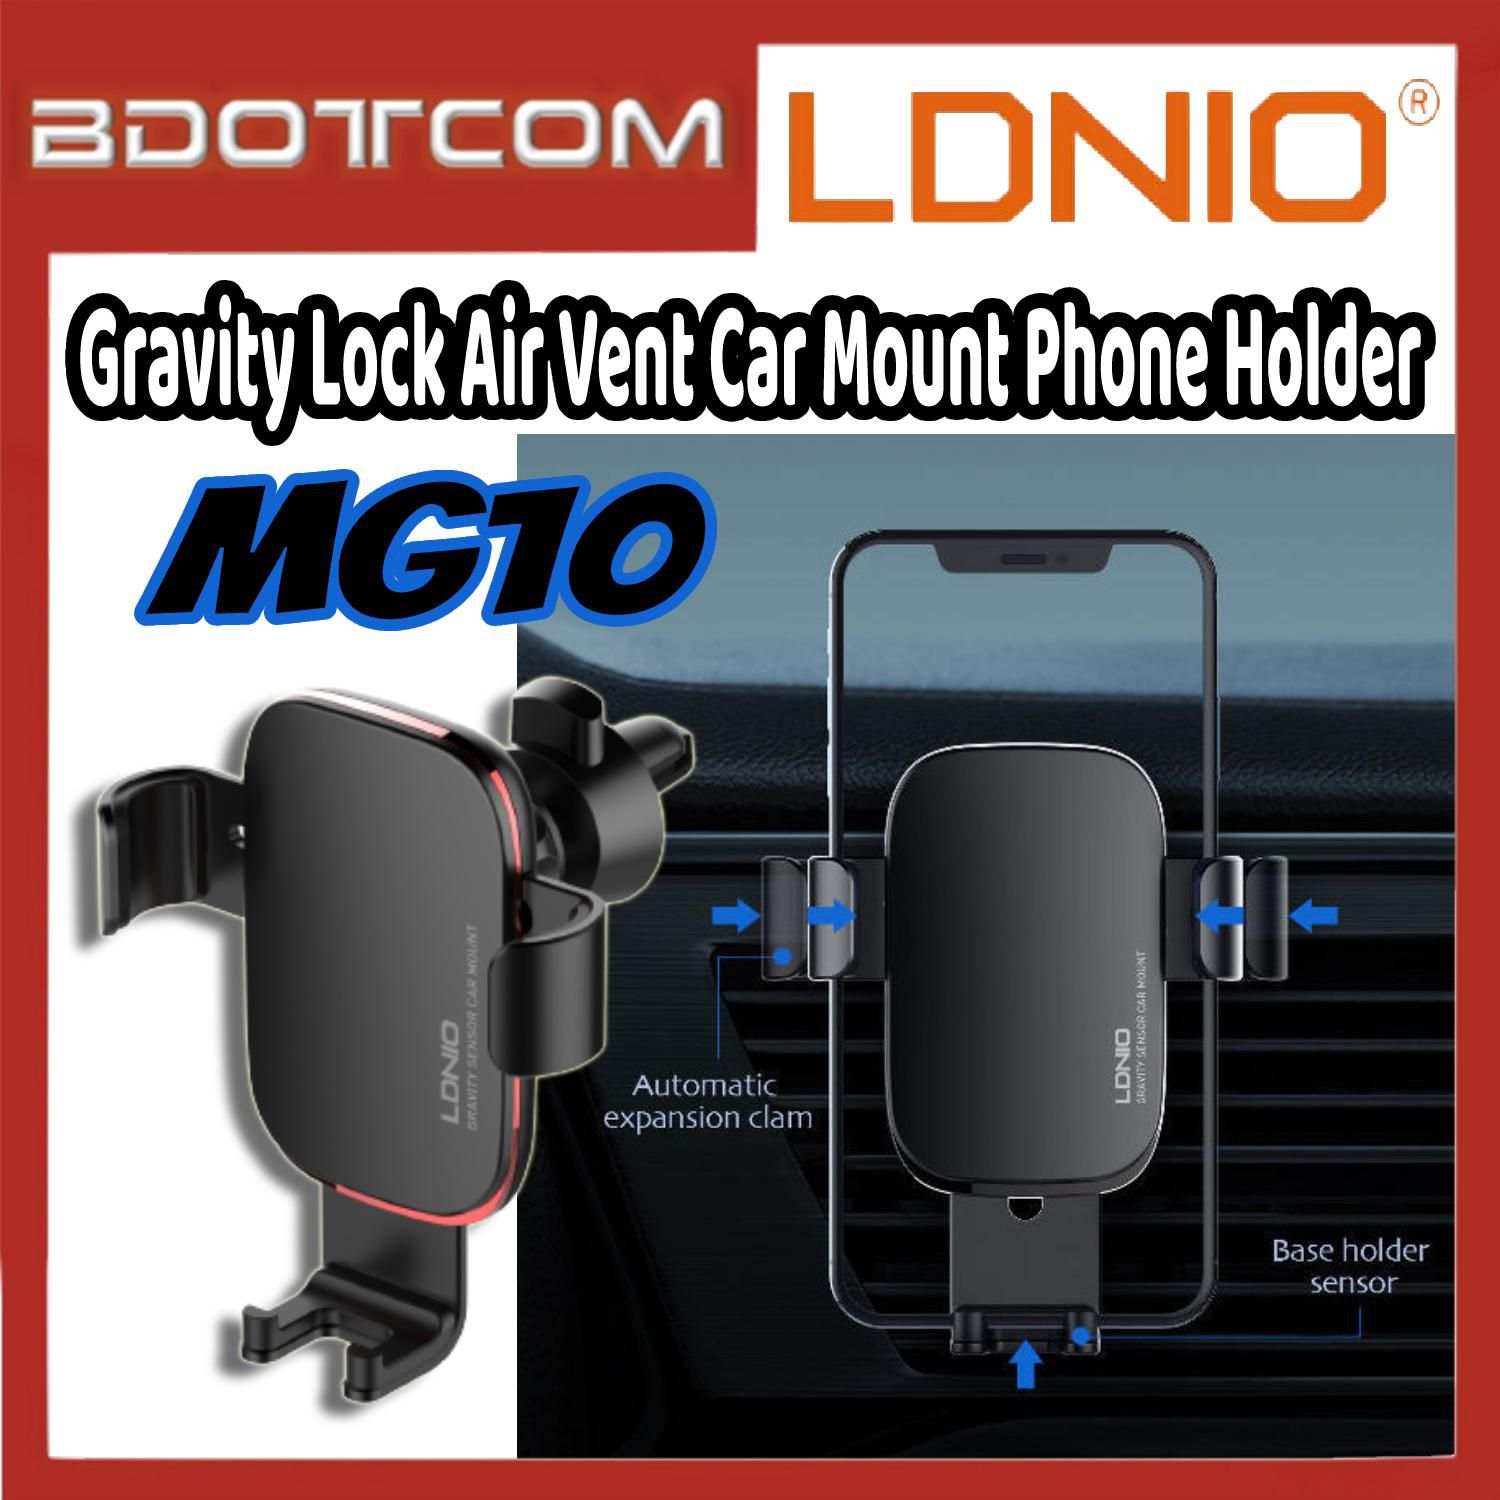 LDNIO MG10 Gravity Lock Air Vent Car Mount Phone Holder (Black)